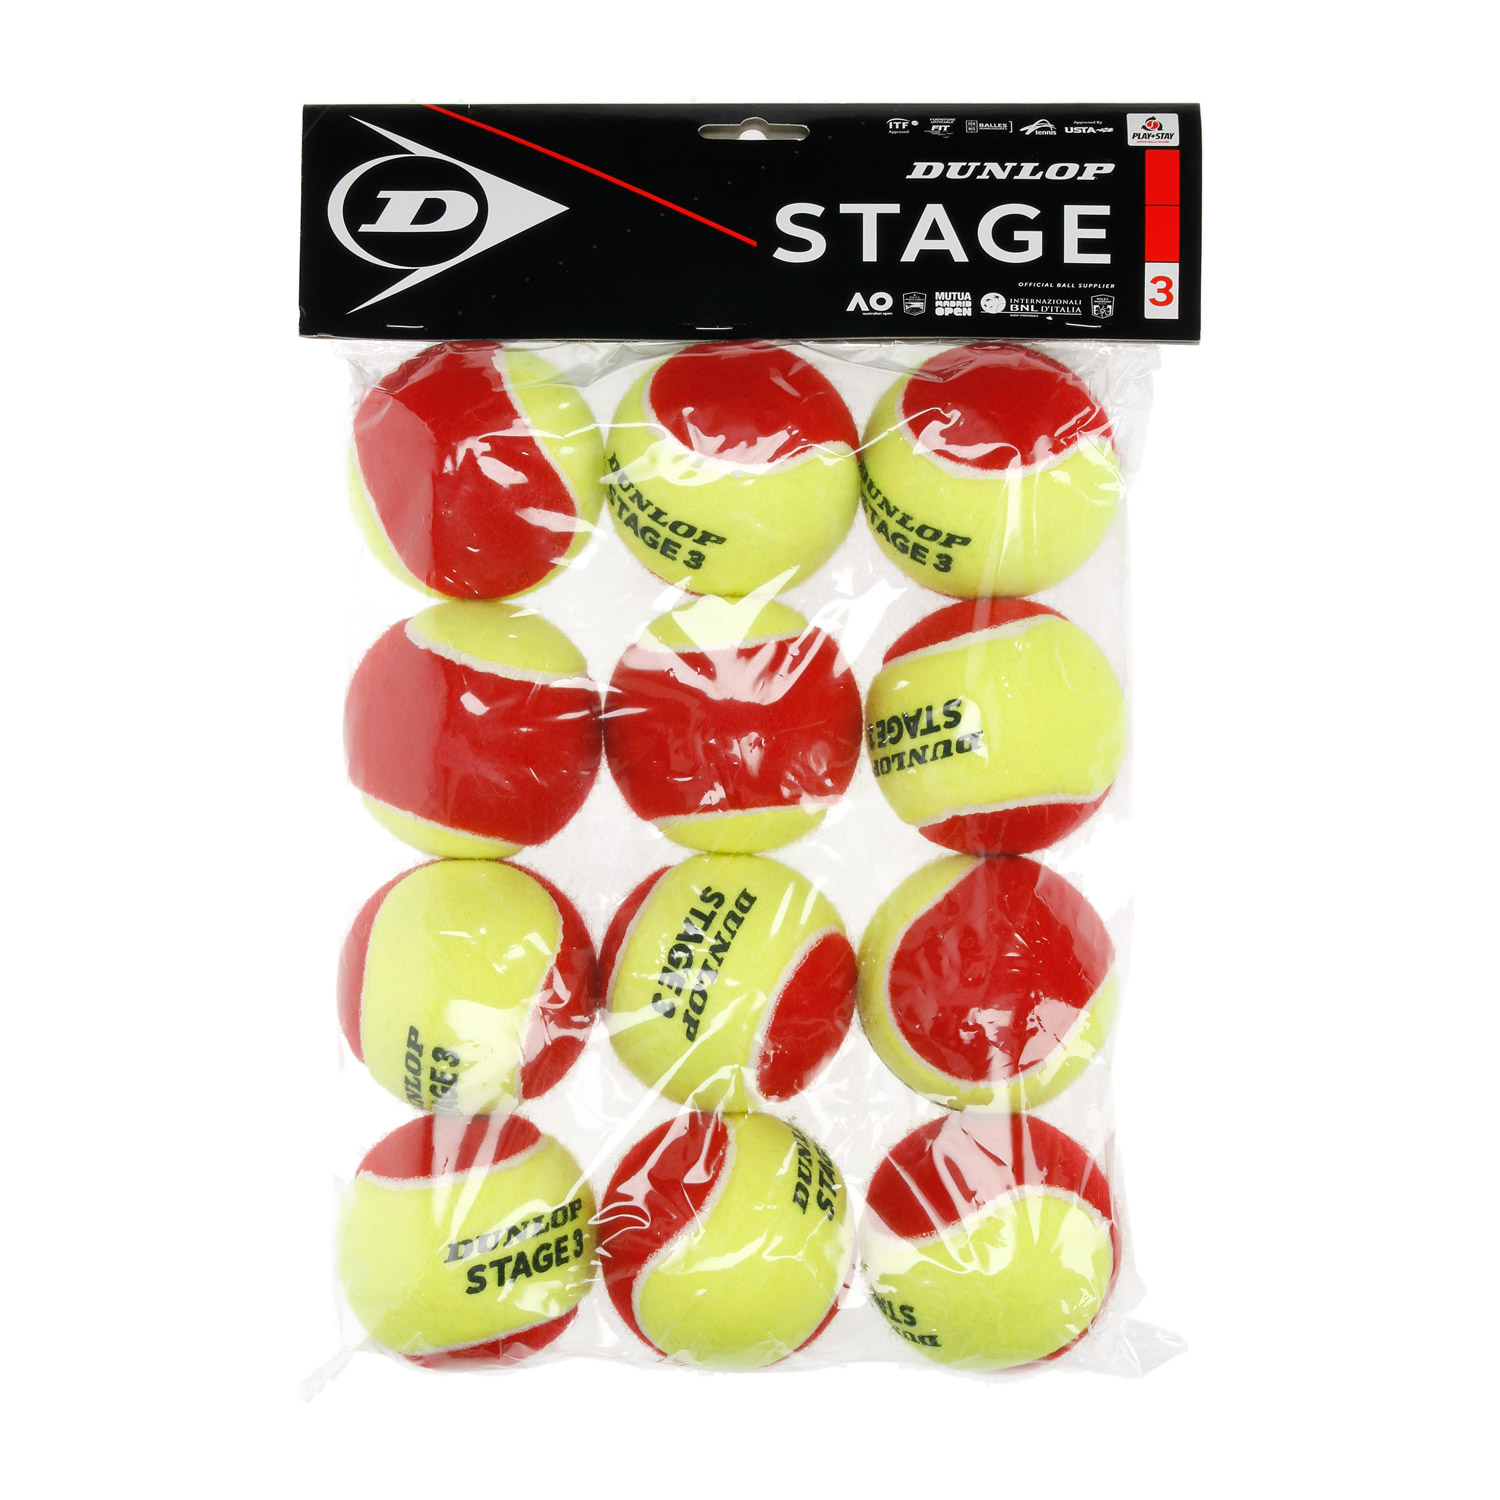 Kader Spelling De stad Dunlop Stage 3 Red - 12 tennis ball Polybag